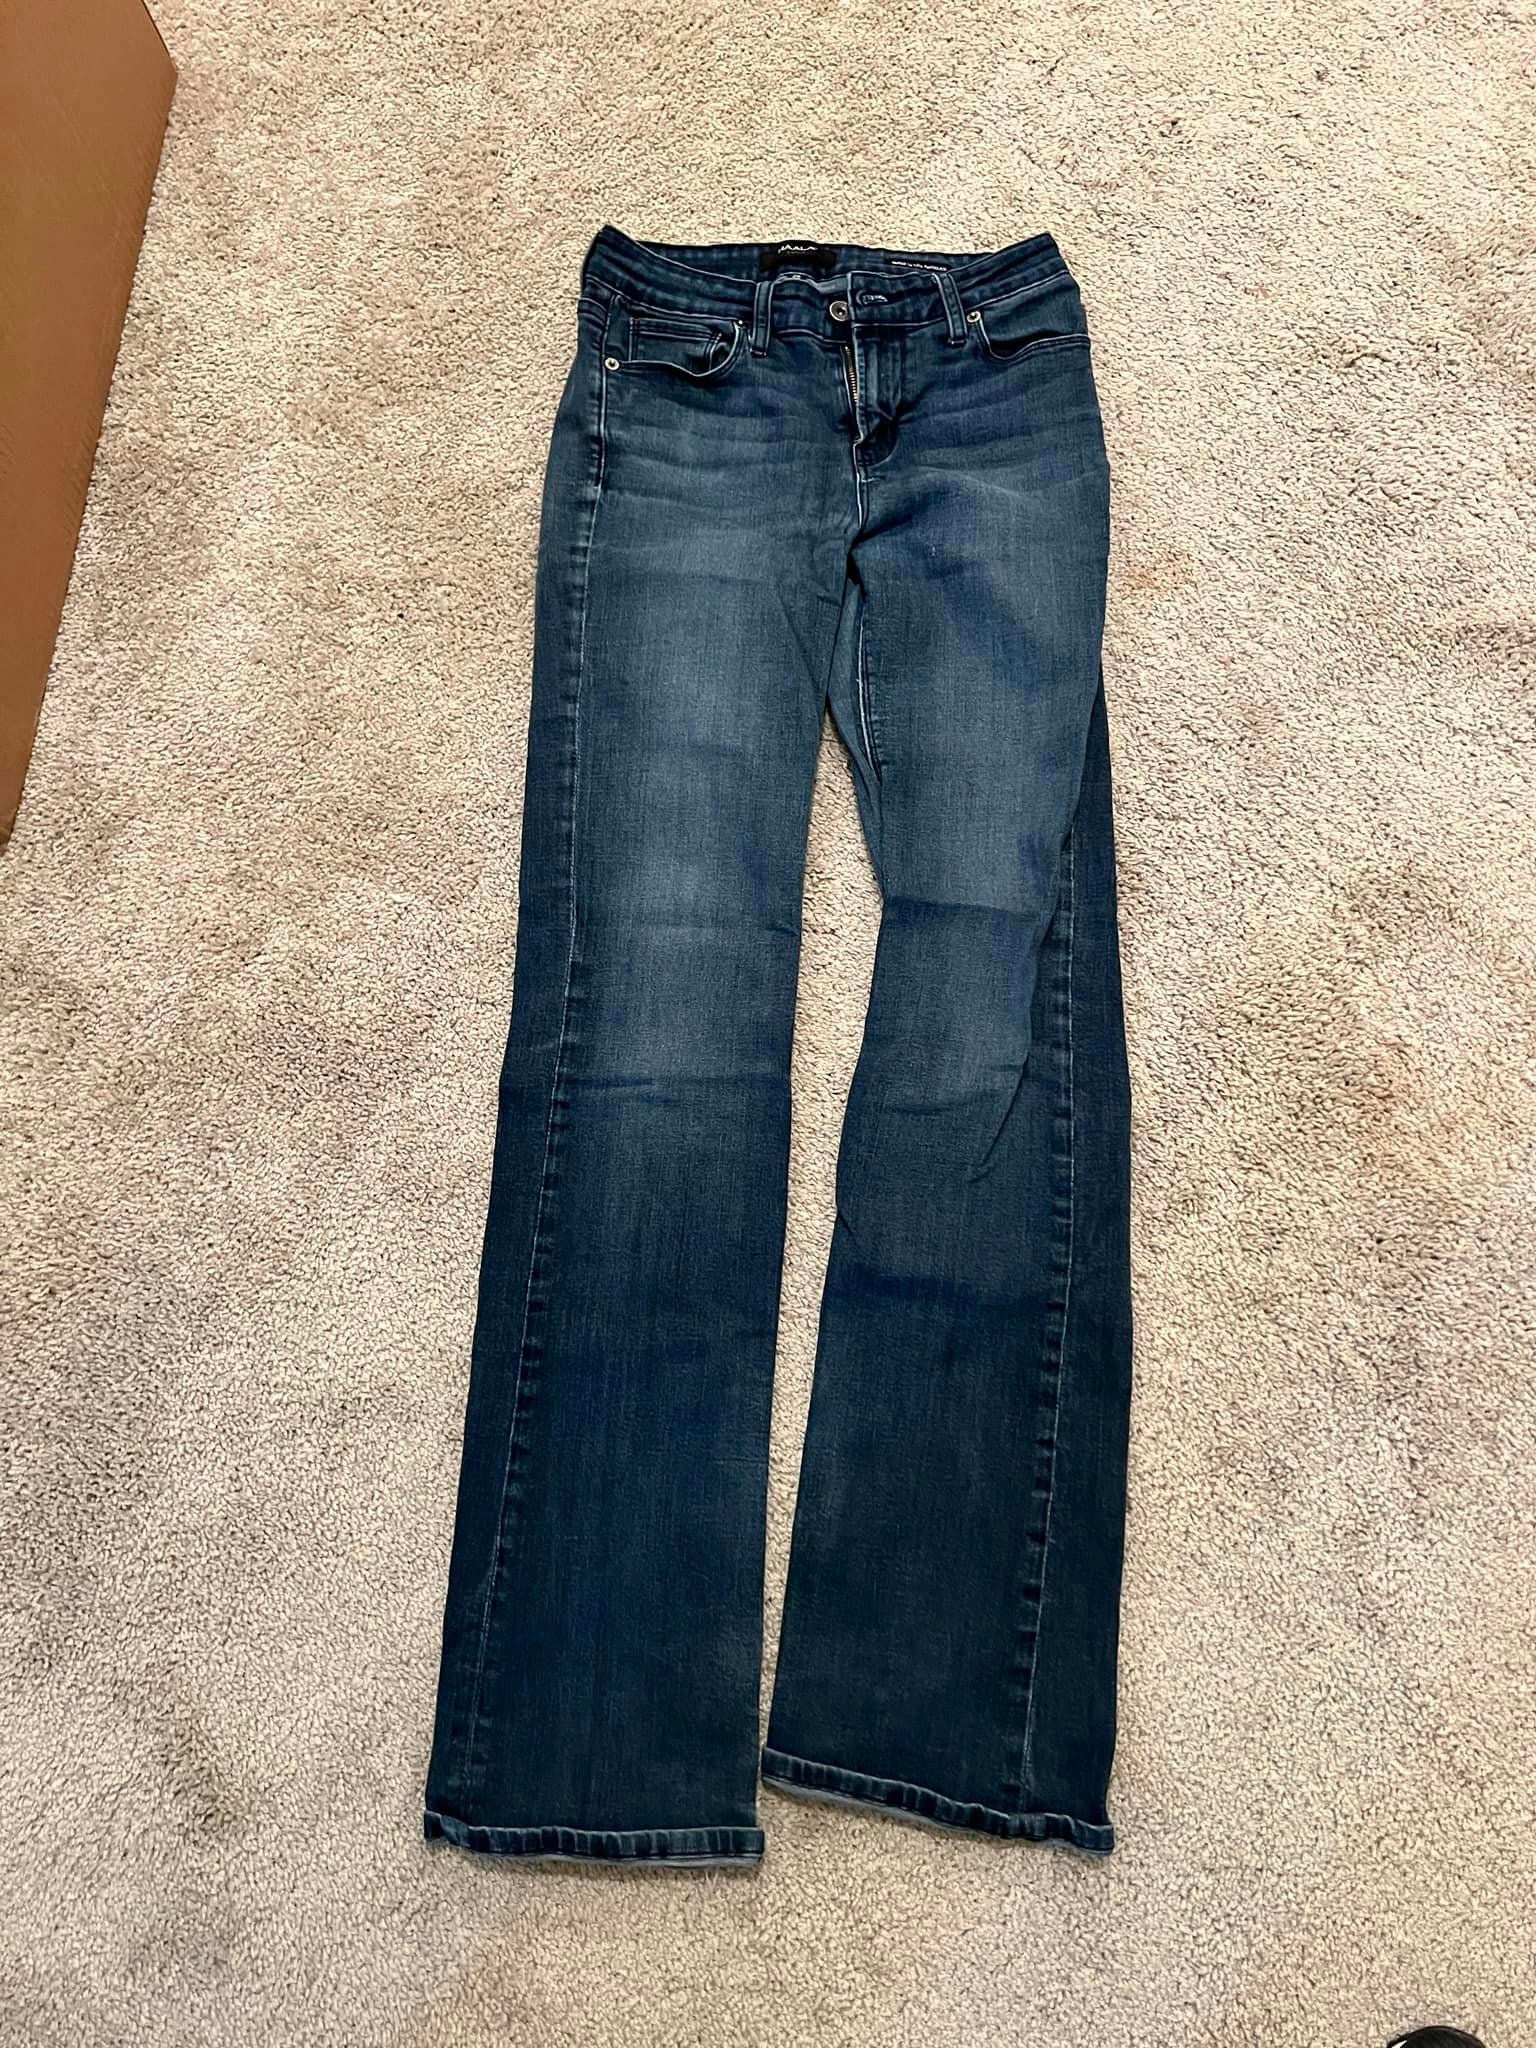 Haala Jeans #3 - Westerly Straight